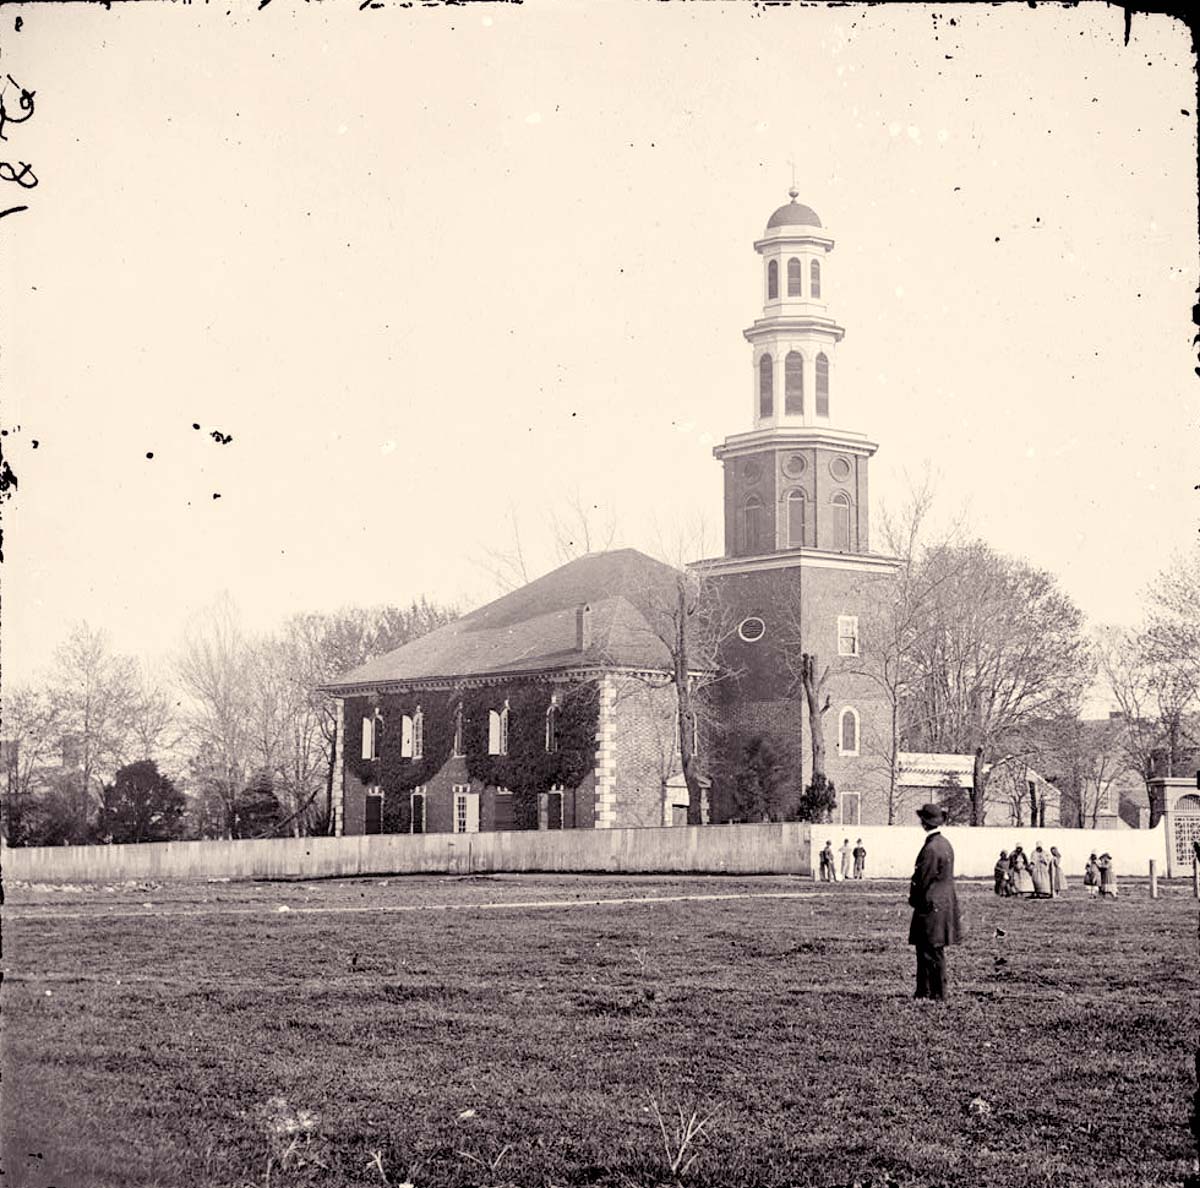 Alexandria, Virginia. Christ Church, between 1861 and 1869